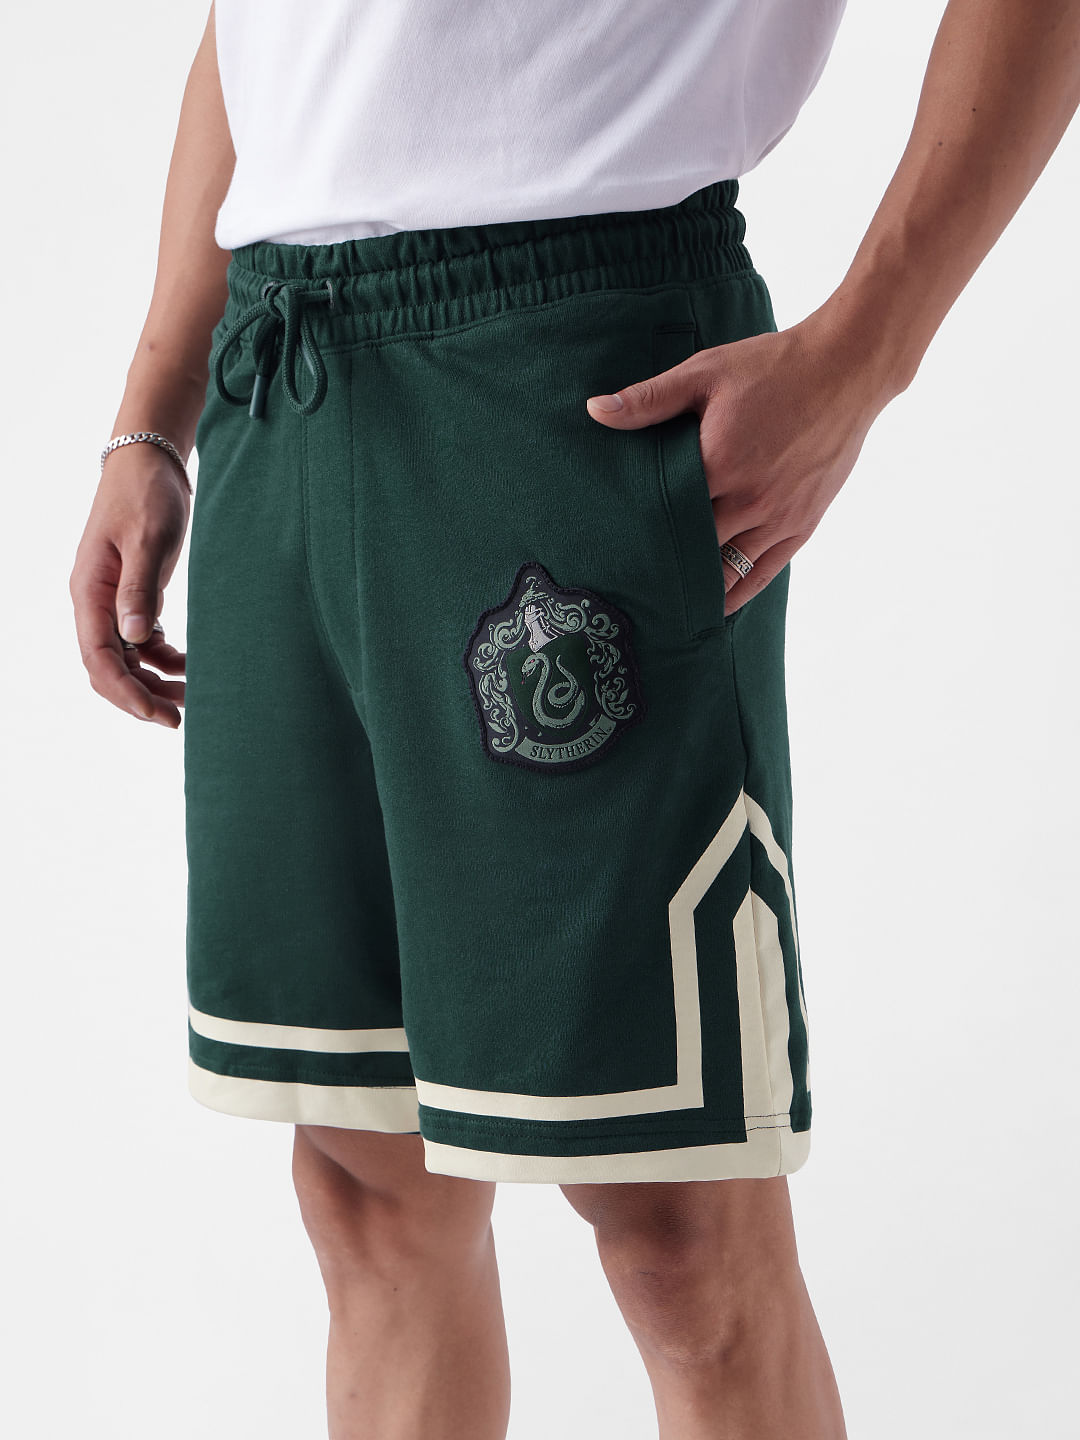 Buy Harry Potter: Slytherin Kit Men Bermuda Shorts Online